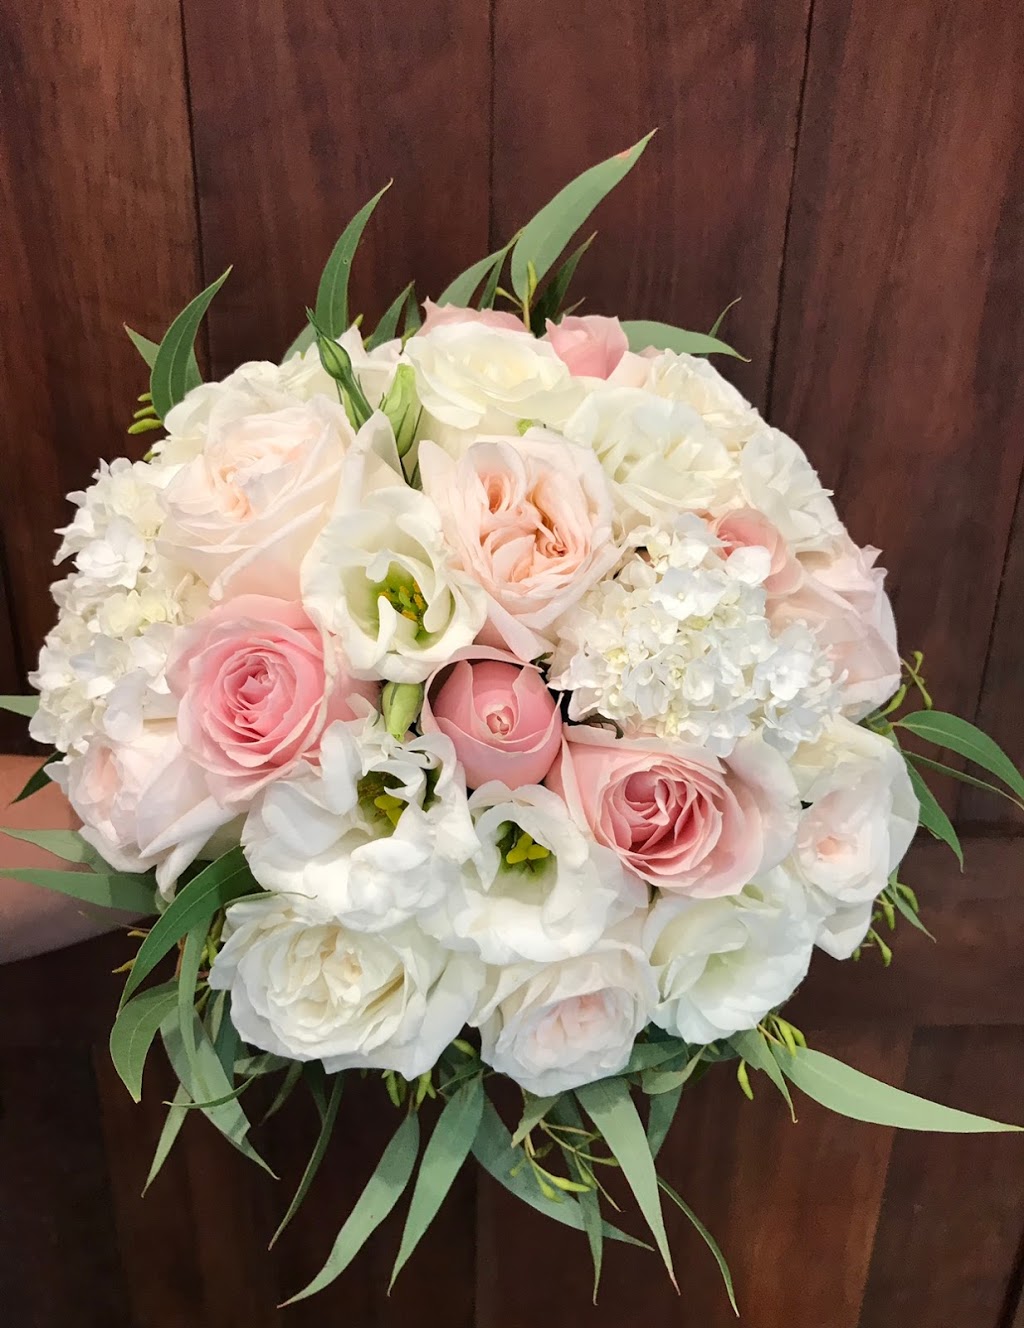 Heavenly Scent Flowers | florist | 6/20 Abernethy Rd, Byford WA 6122, Australia | 0895251155 OR +61 8 9525 1155